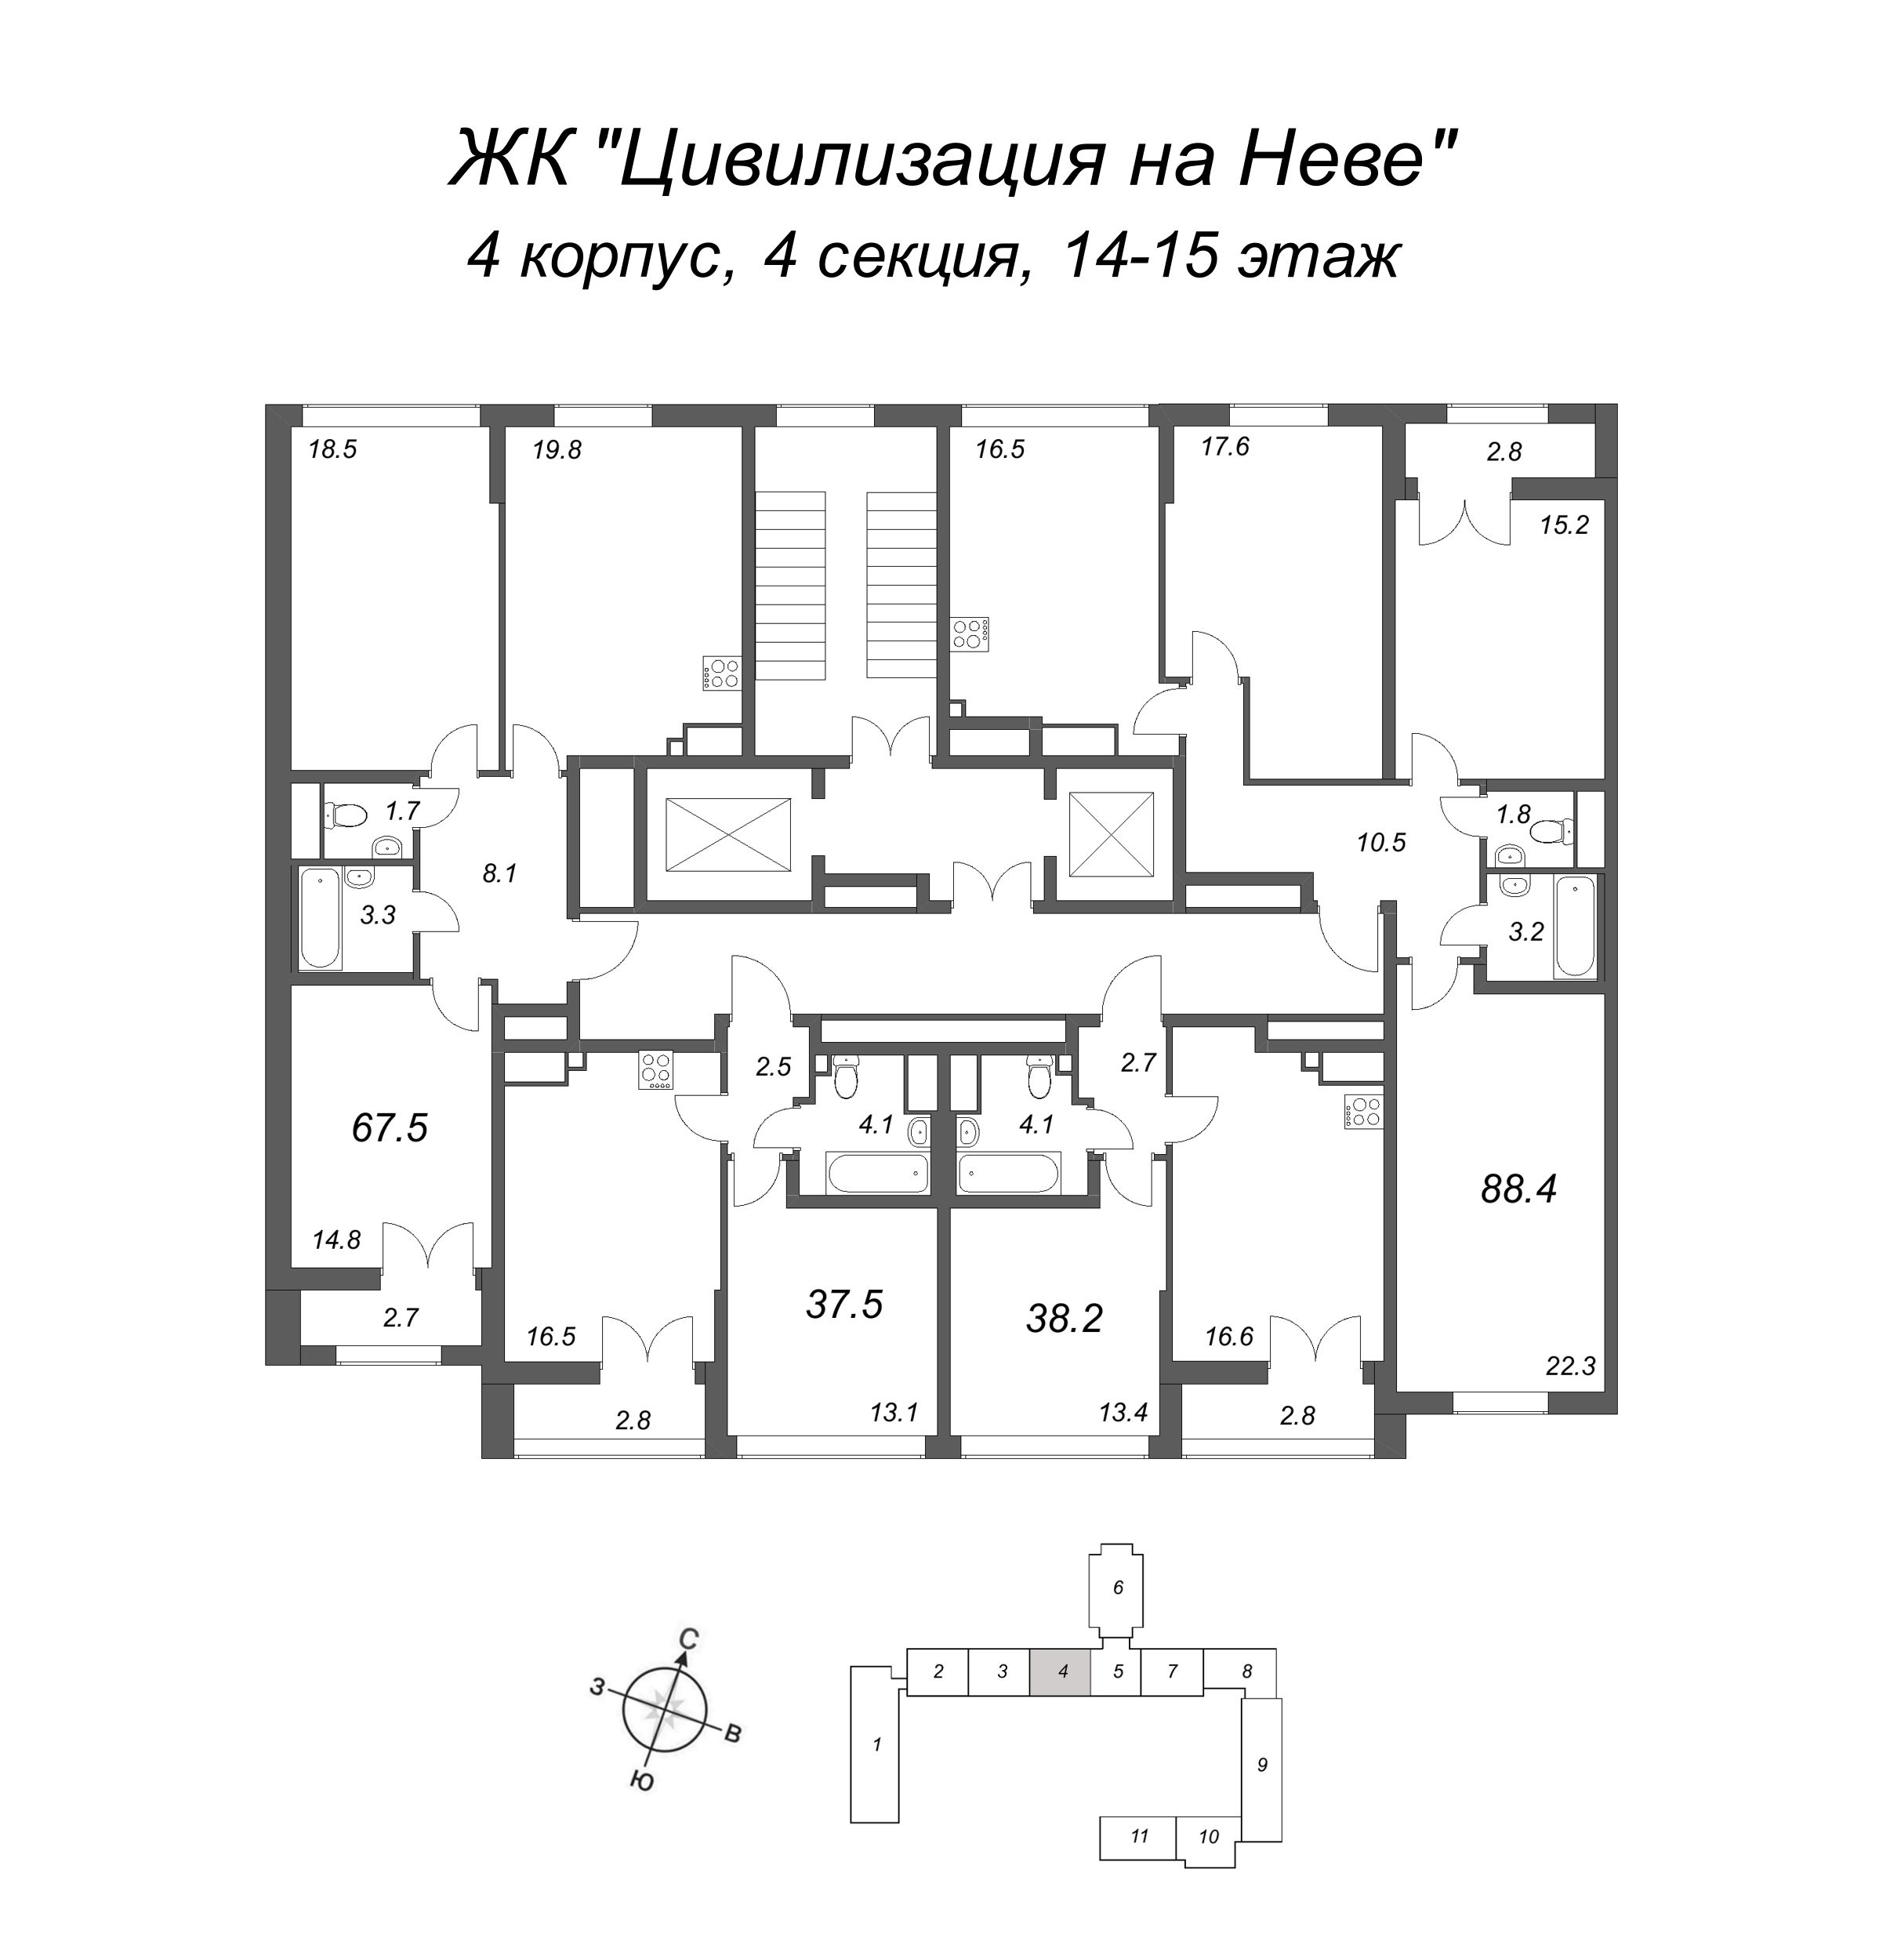 3-комнатная (Евро) квартира, 67.5 м² - планировка этажа